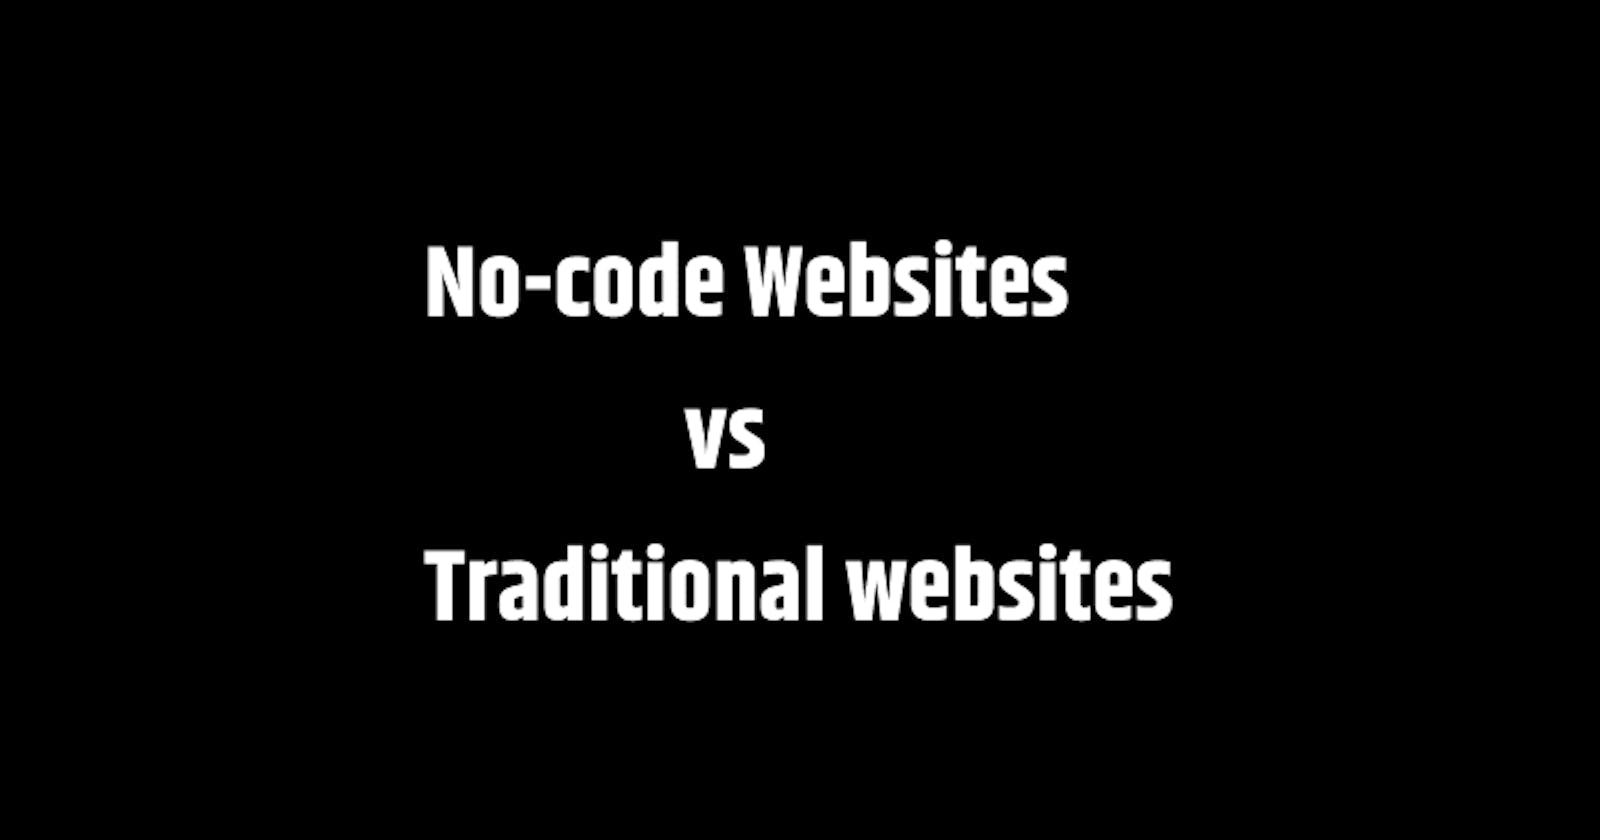 No-code Websites vs Traditional Websites